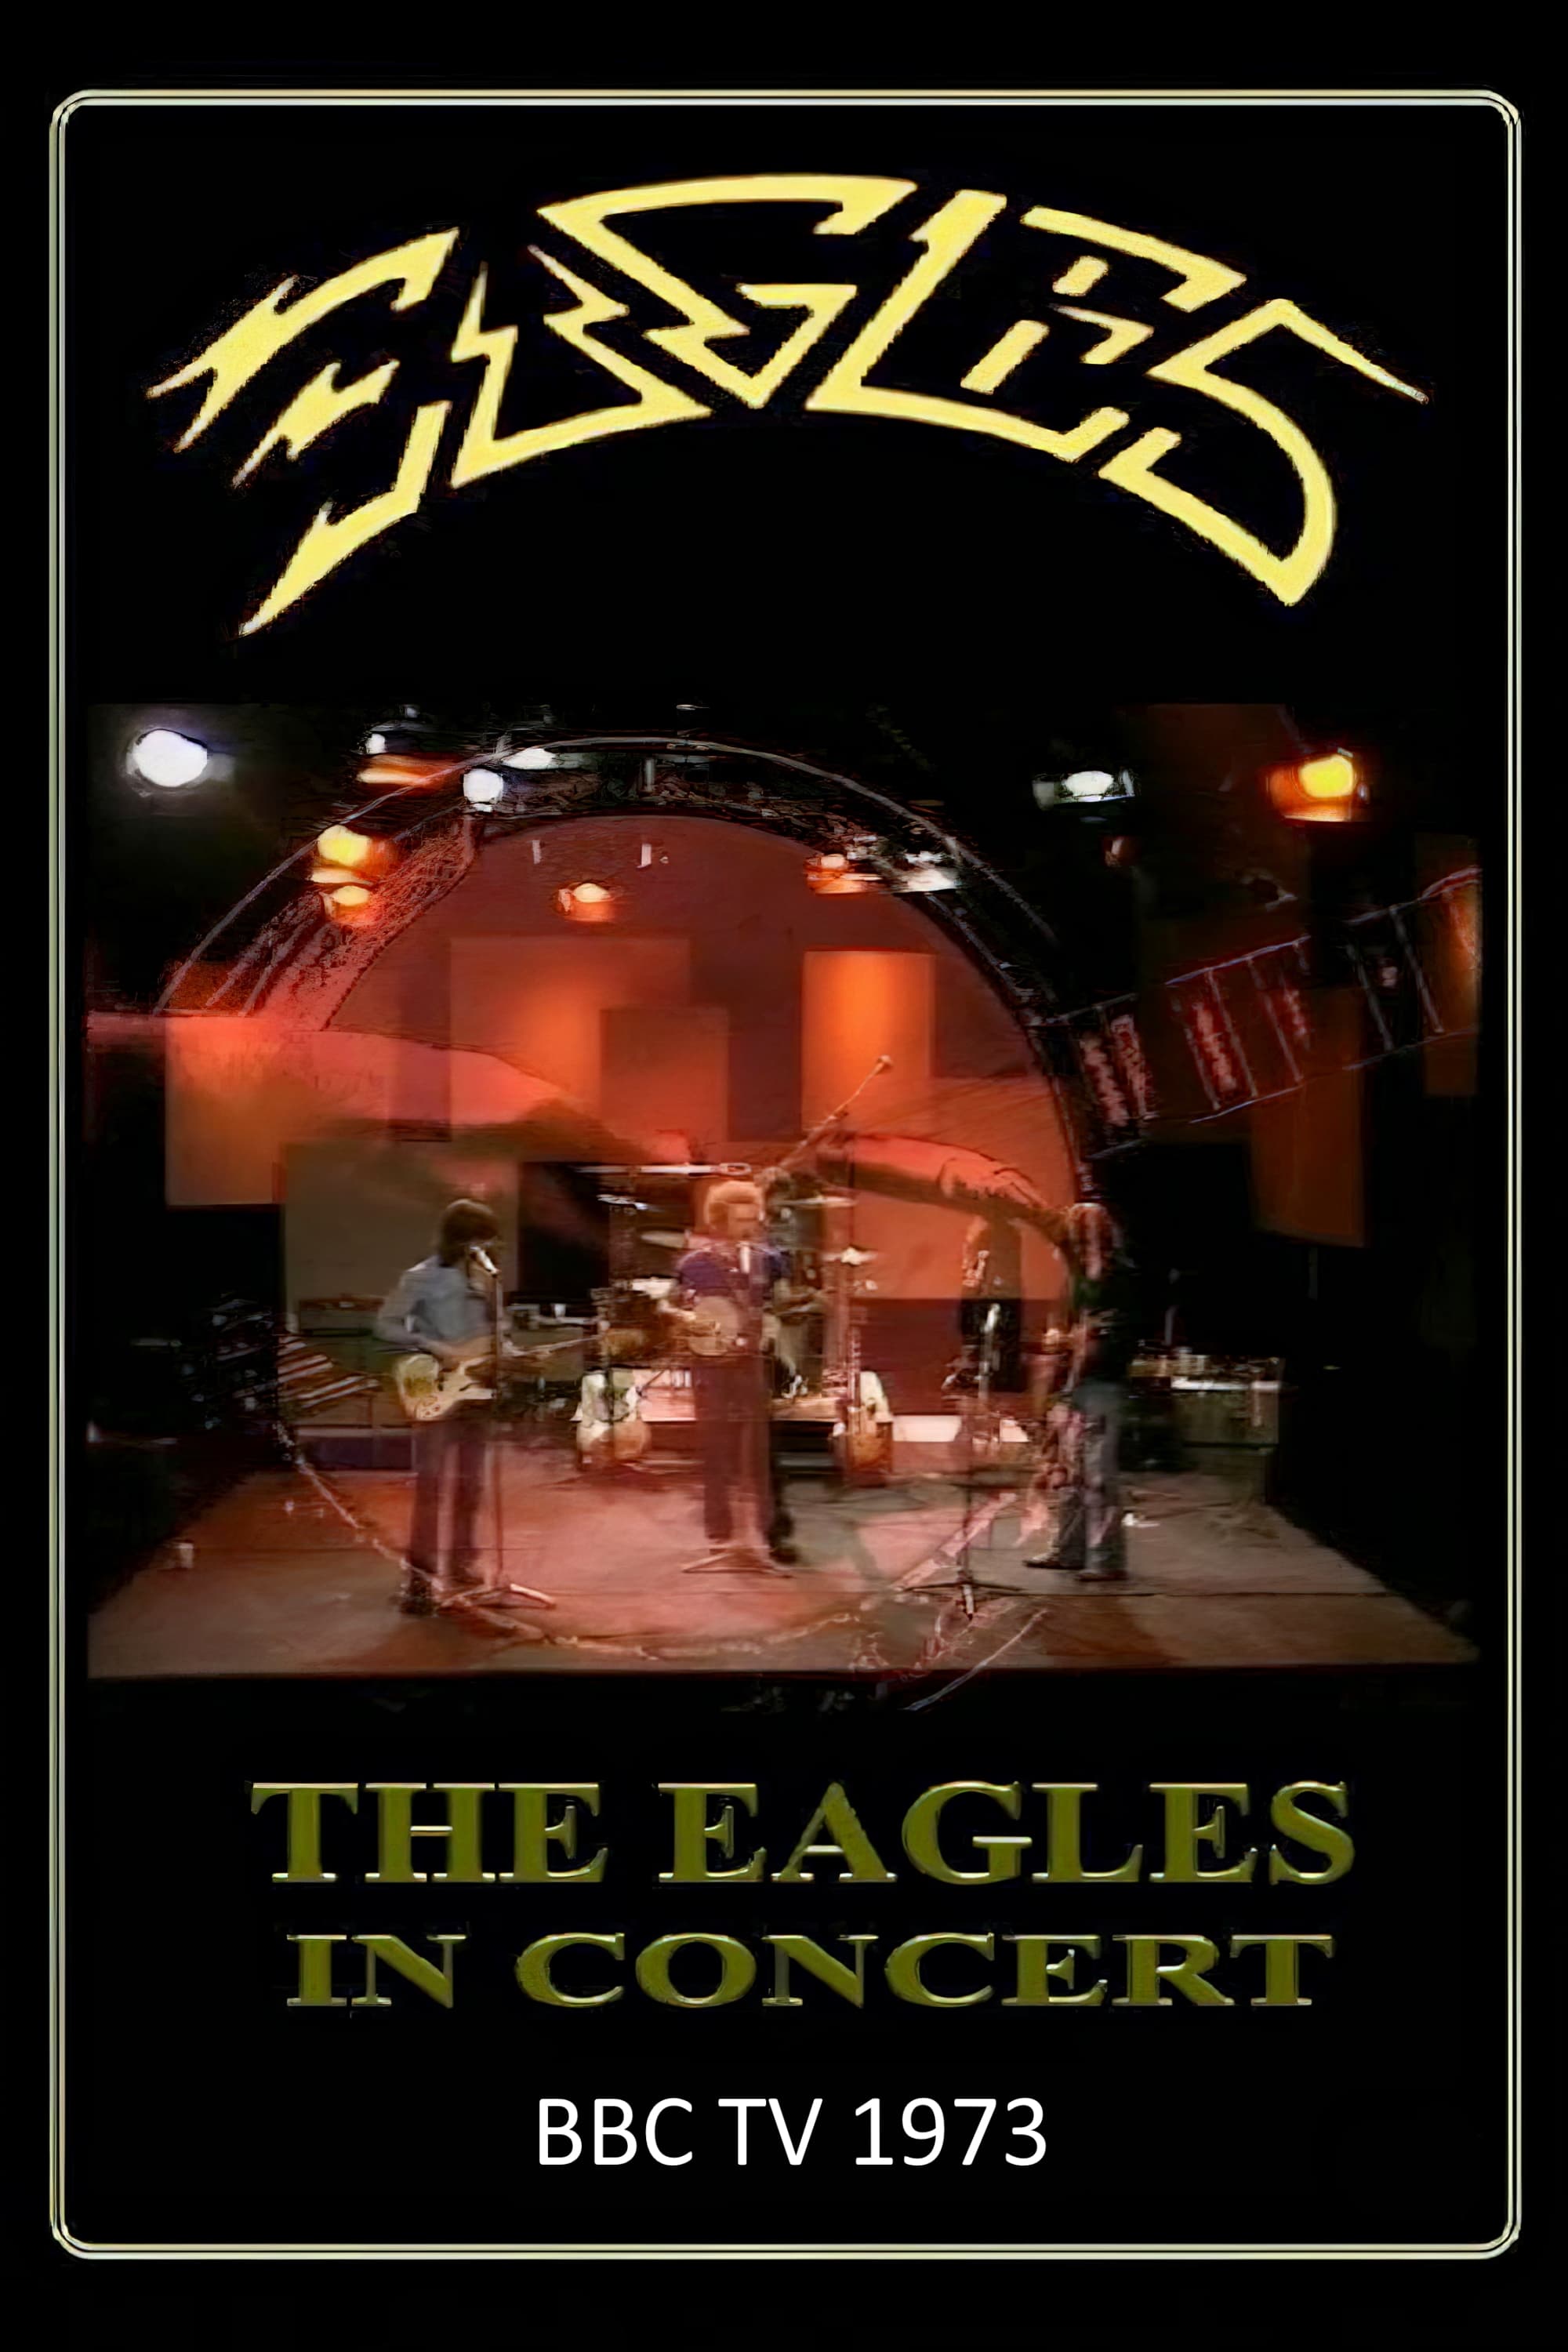 Eagles - BBC In Concert